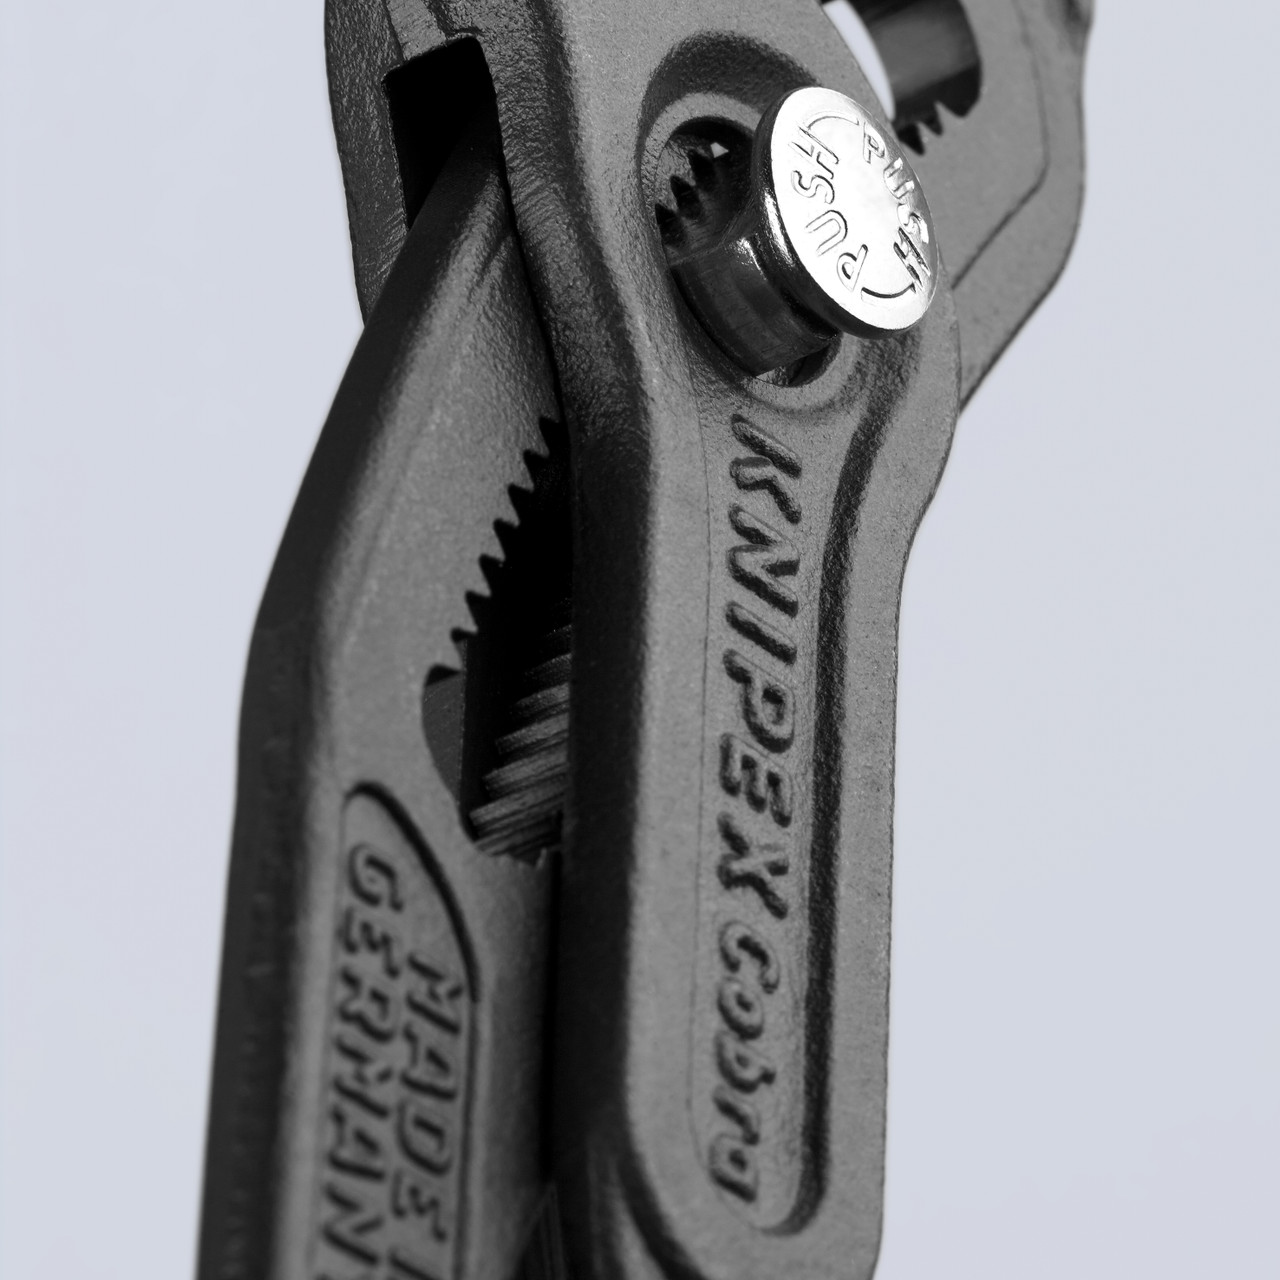 Knipex 2pc Cobra Pliers Set